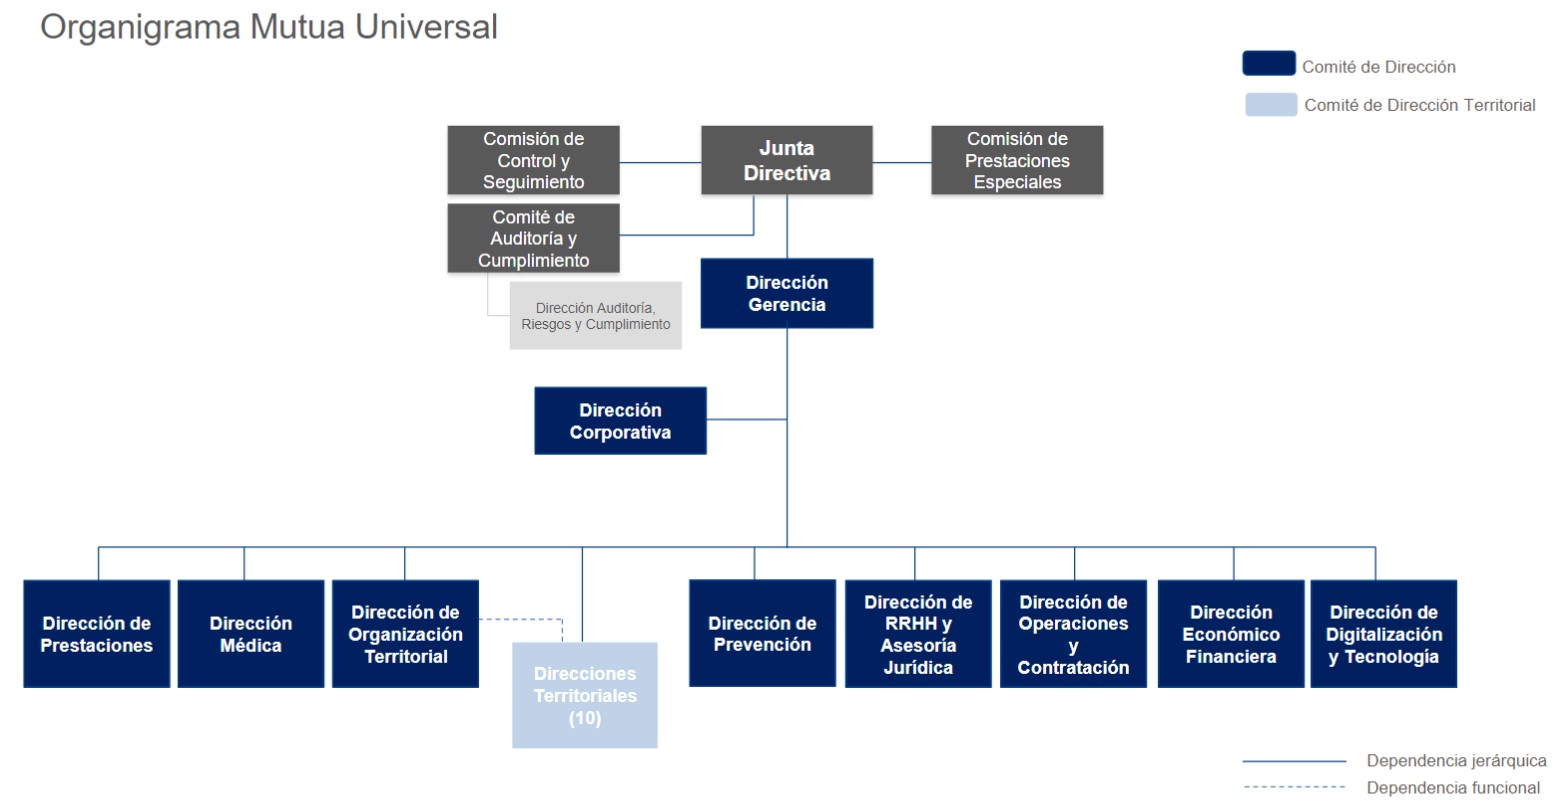 Organisational model of Mutua Universal